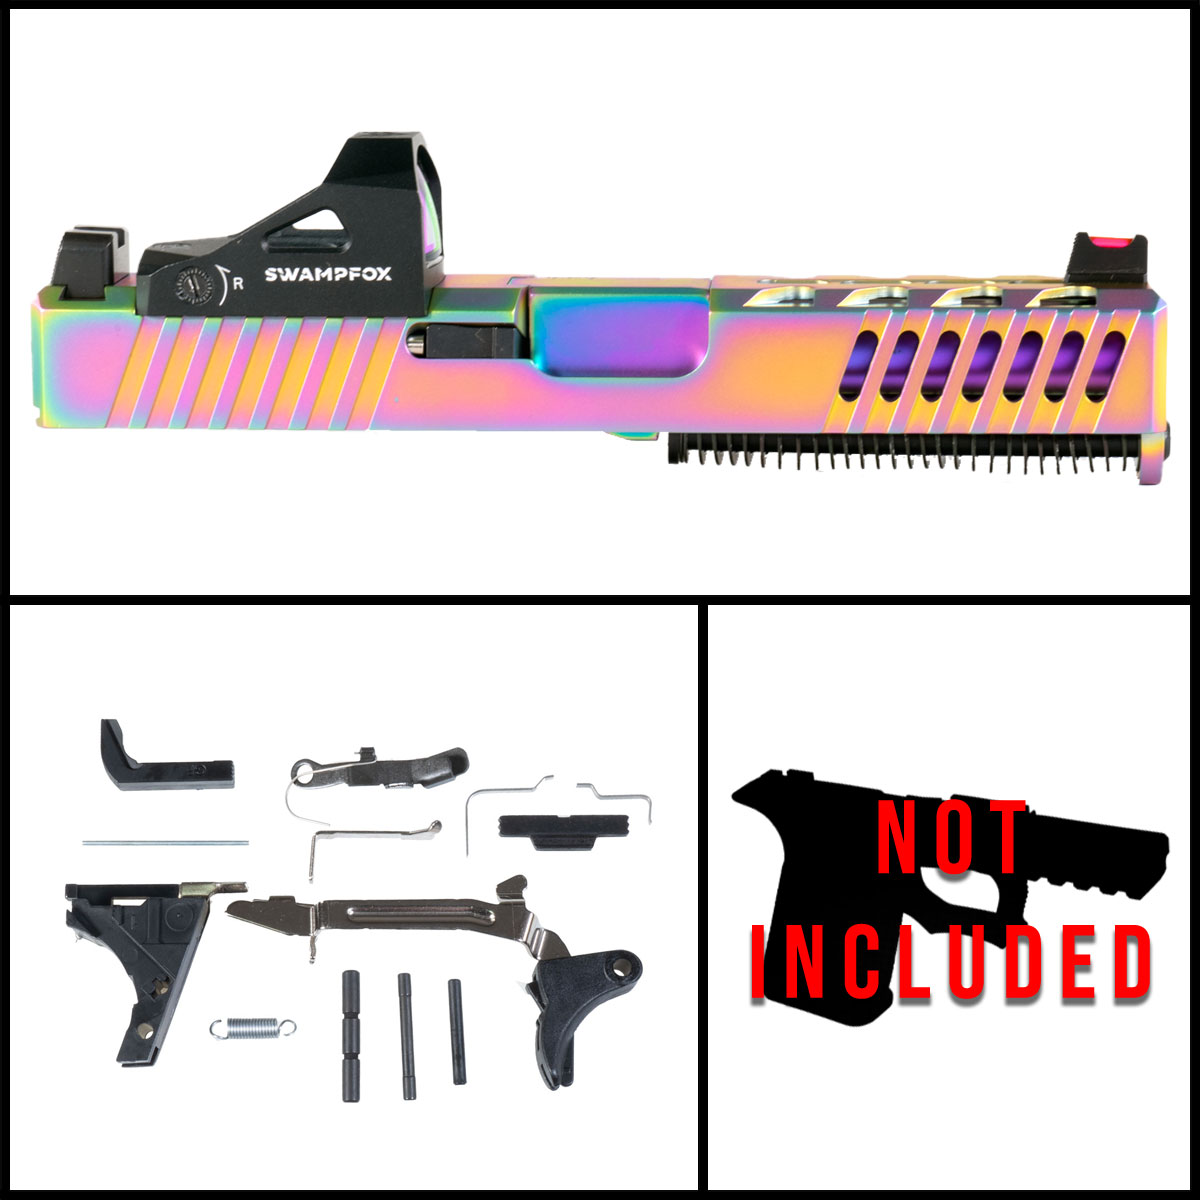 MMC 'SkyShade w/ Swampfox Justice RMR' 9mm Full Pistol Build Kits (Everything Minus Frame) - Glock 19 Gen 1-2 Compatible